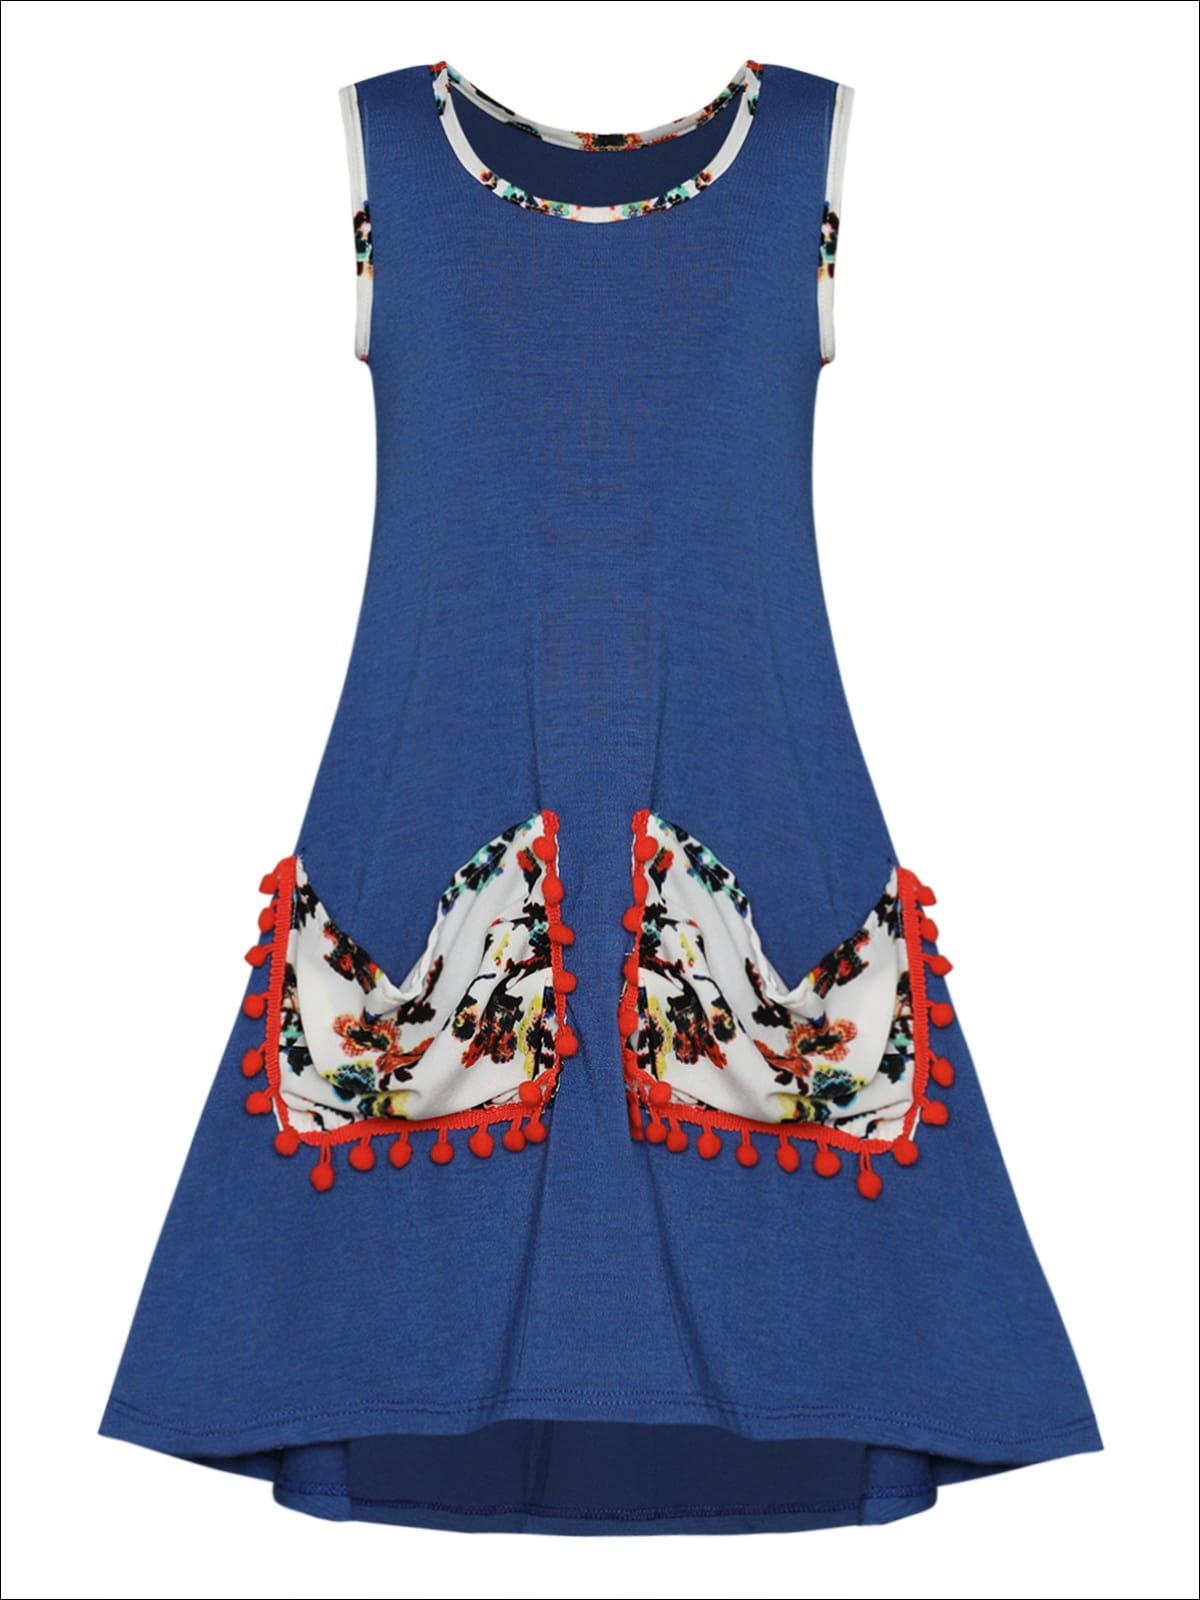 Girls Hi-Lo Slouchy Pocket Dress - Blue / 2T/3T - Girls Spring Casual Dress